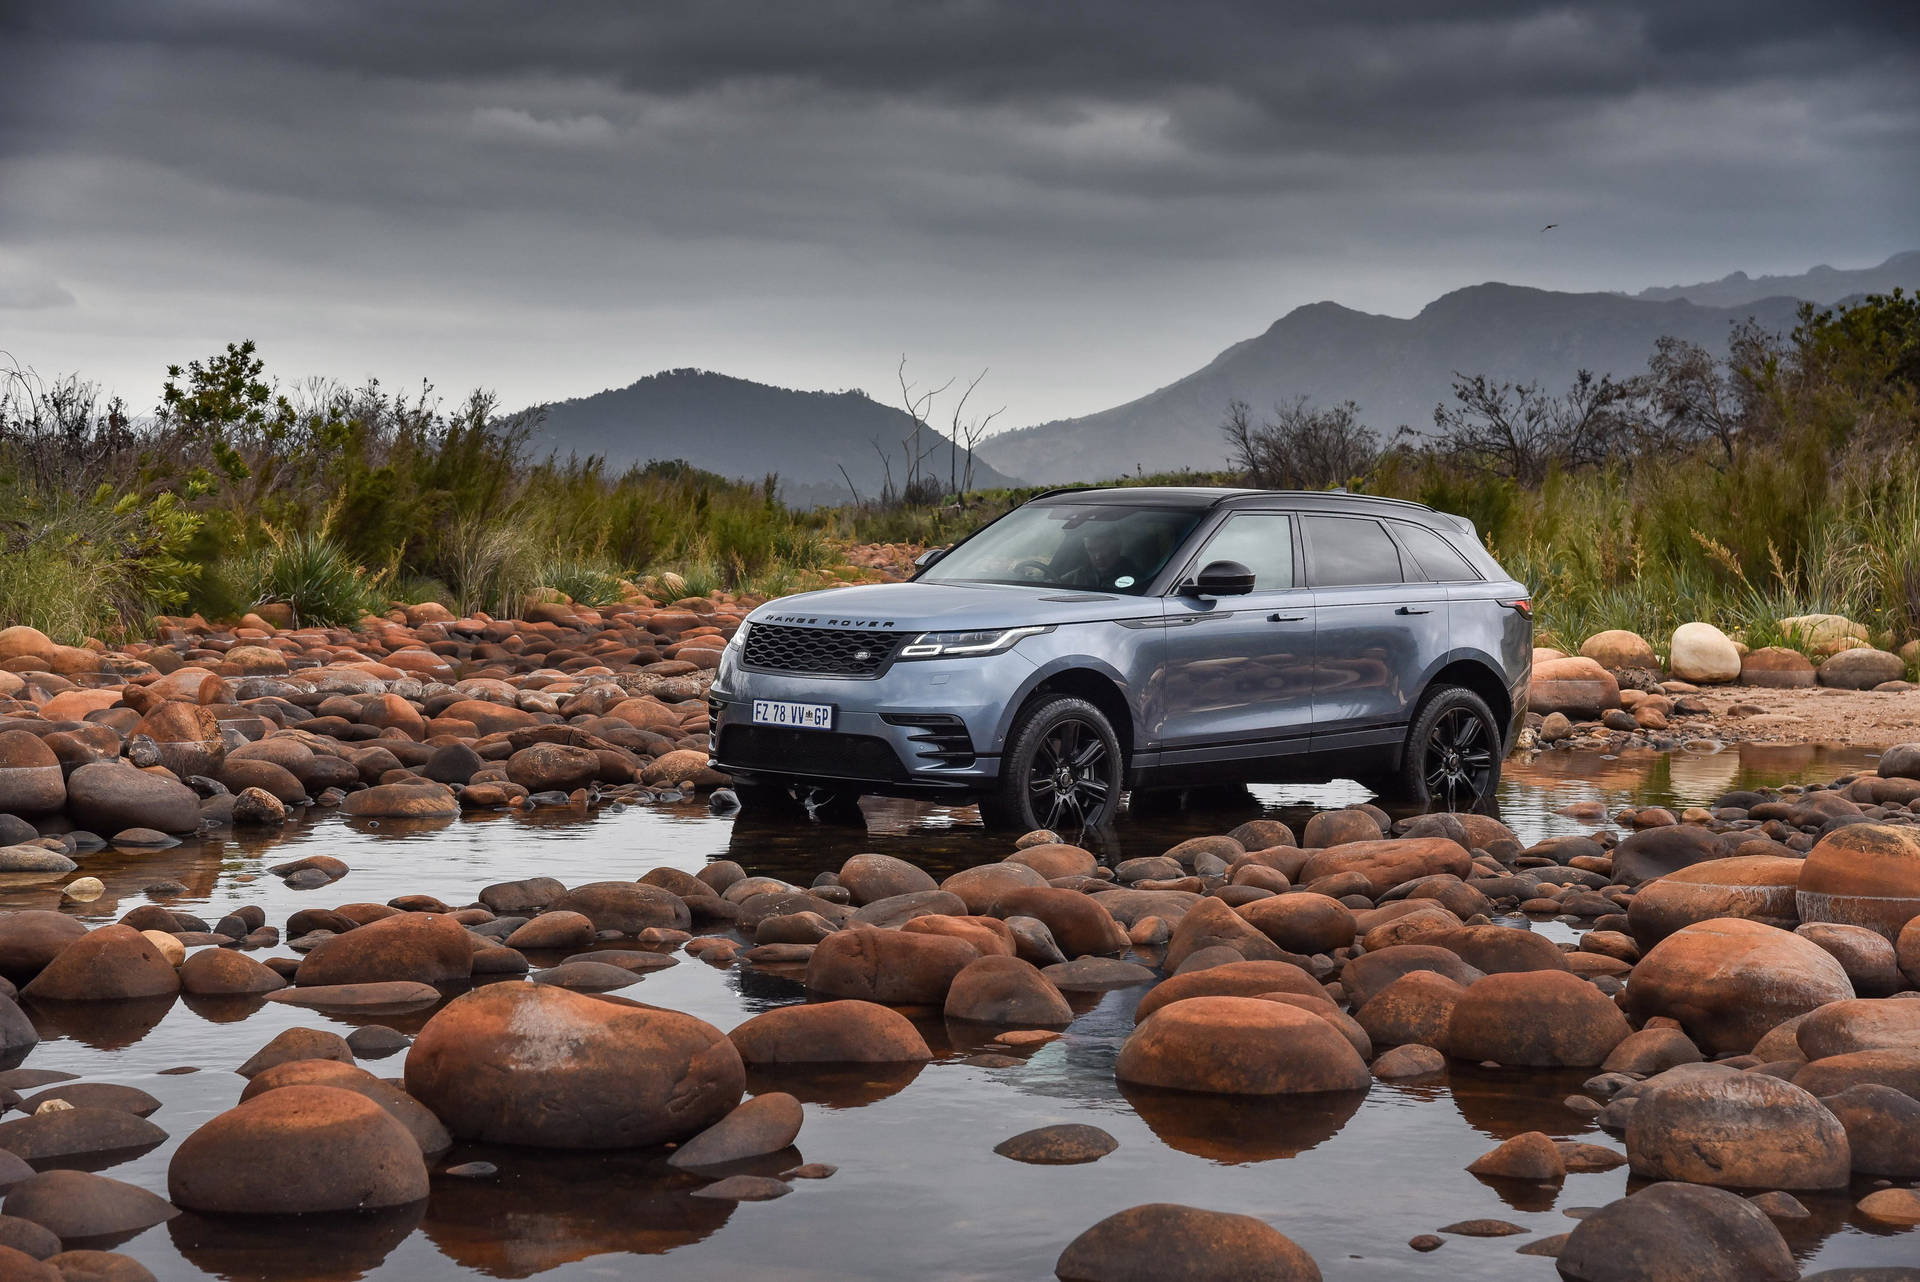 Majestic 4k Range Rover Velar Amidst Nature's Stones Wallpaper